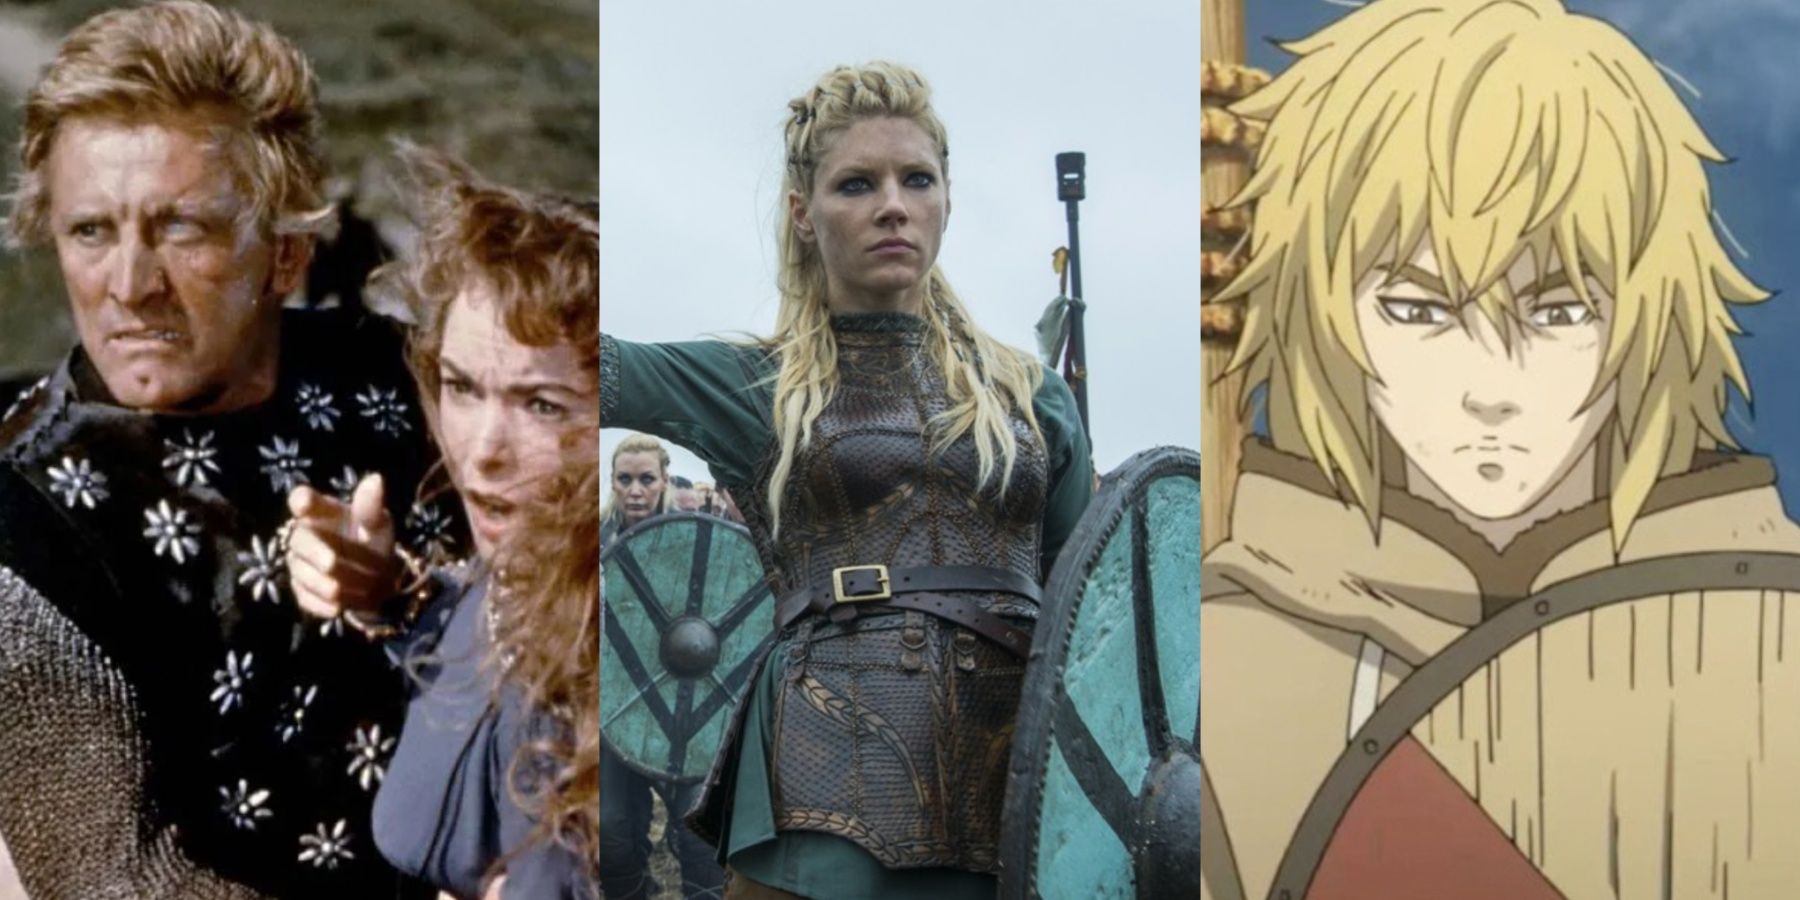 Vikings (TV Series 2013–2020) - “Cast” credits - IMDb